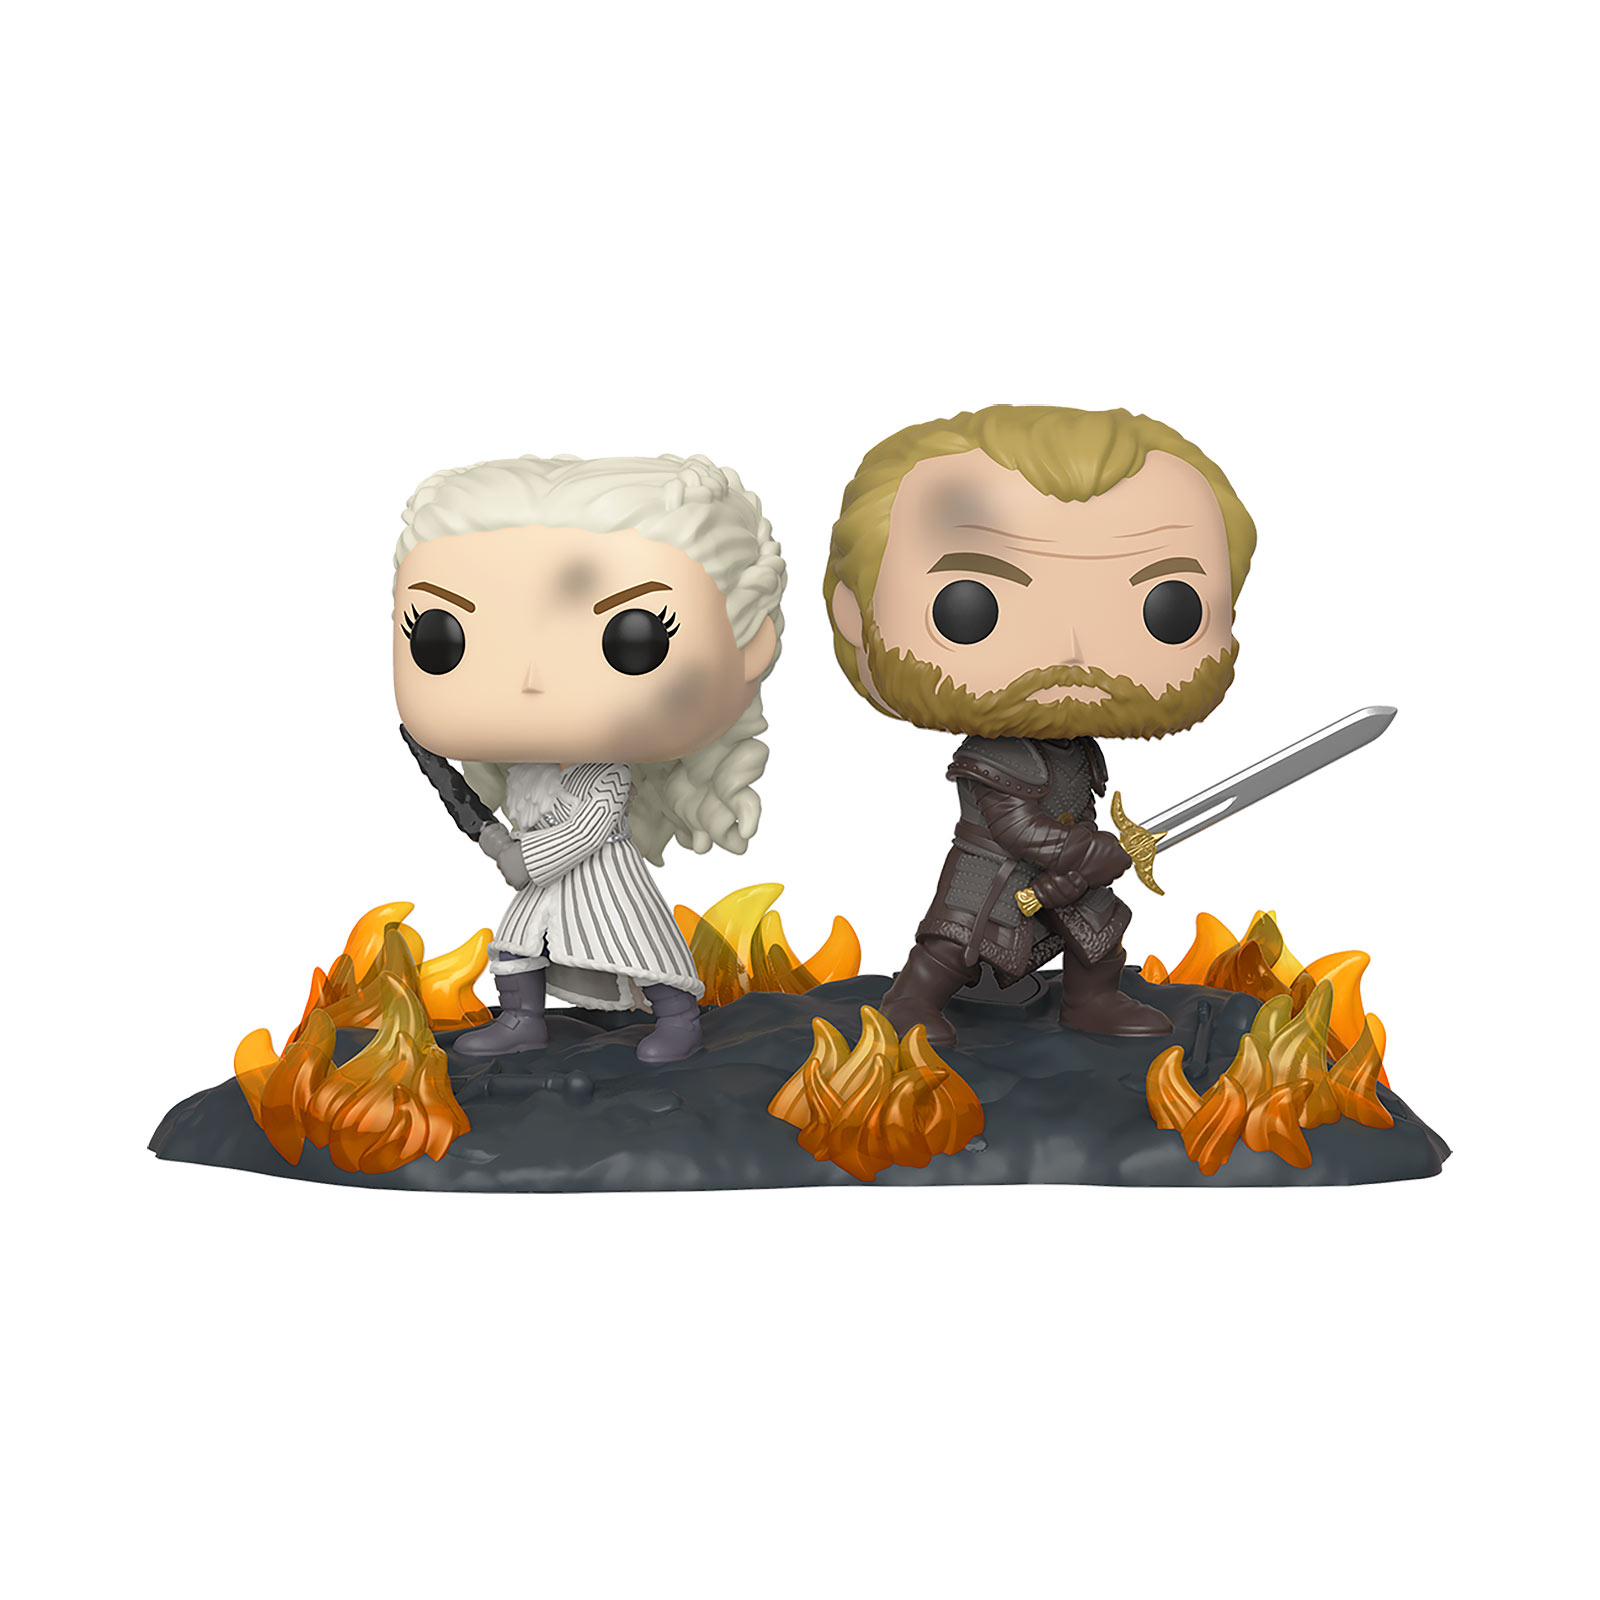 Game of Thrones - Daenerys & Jorah Figurine Funko Pop